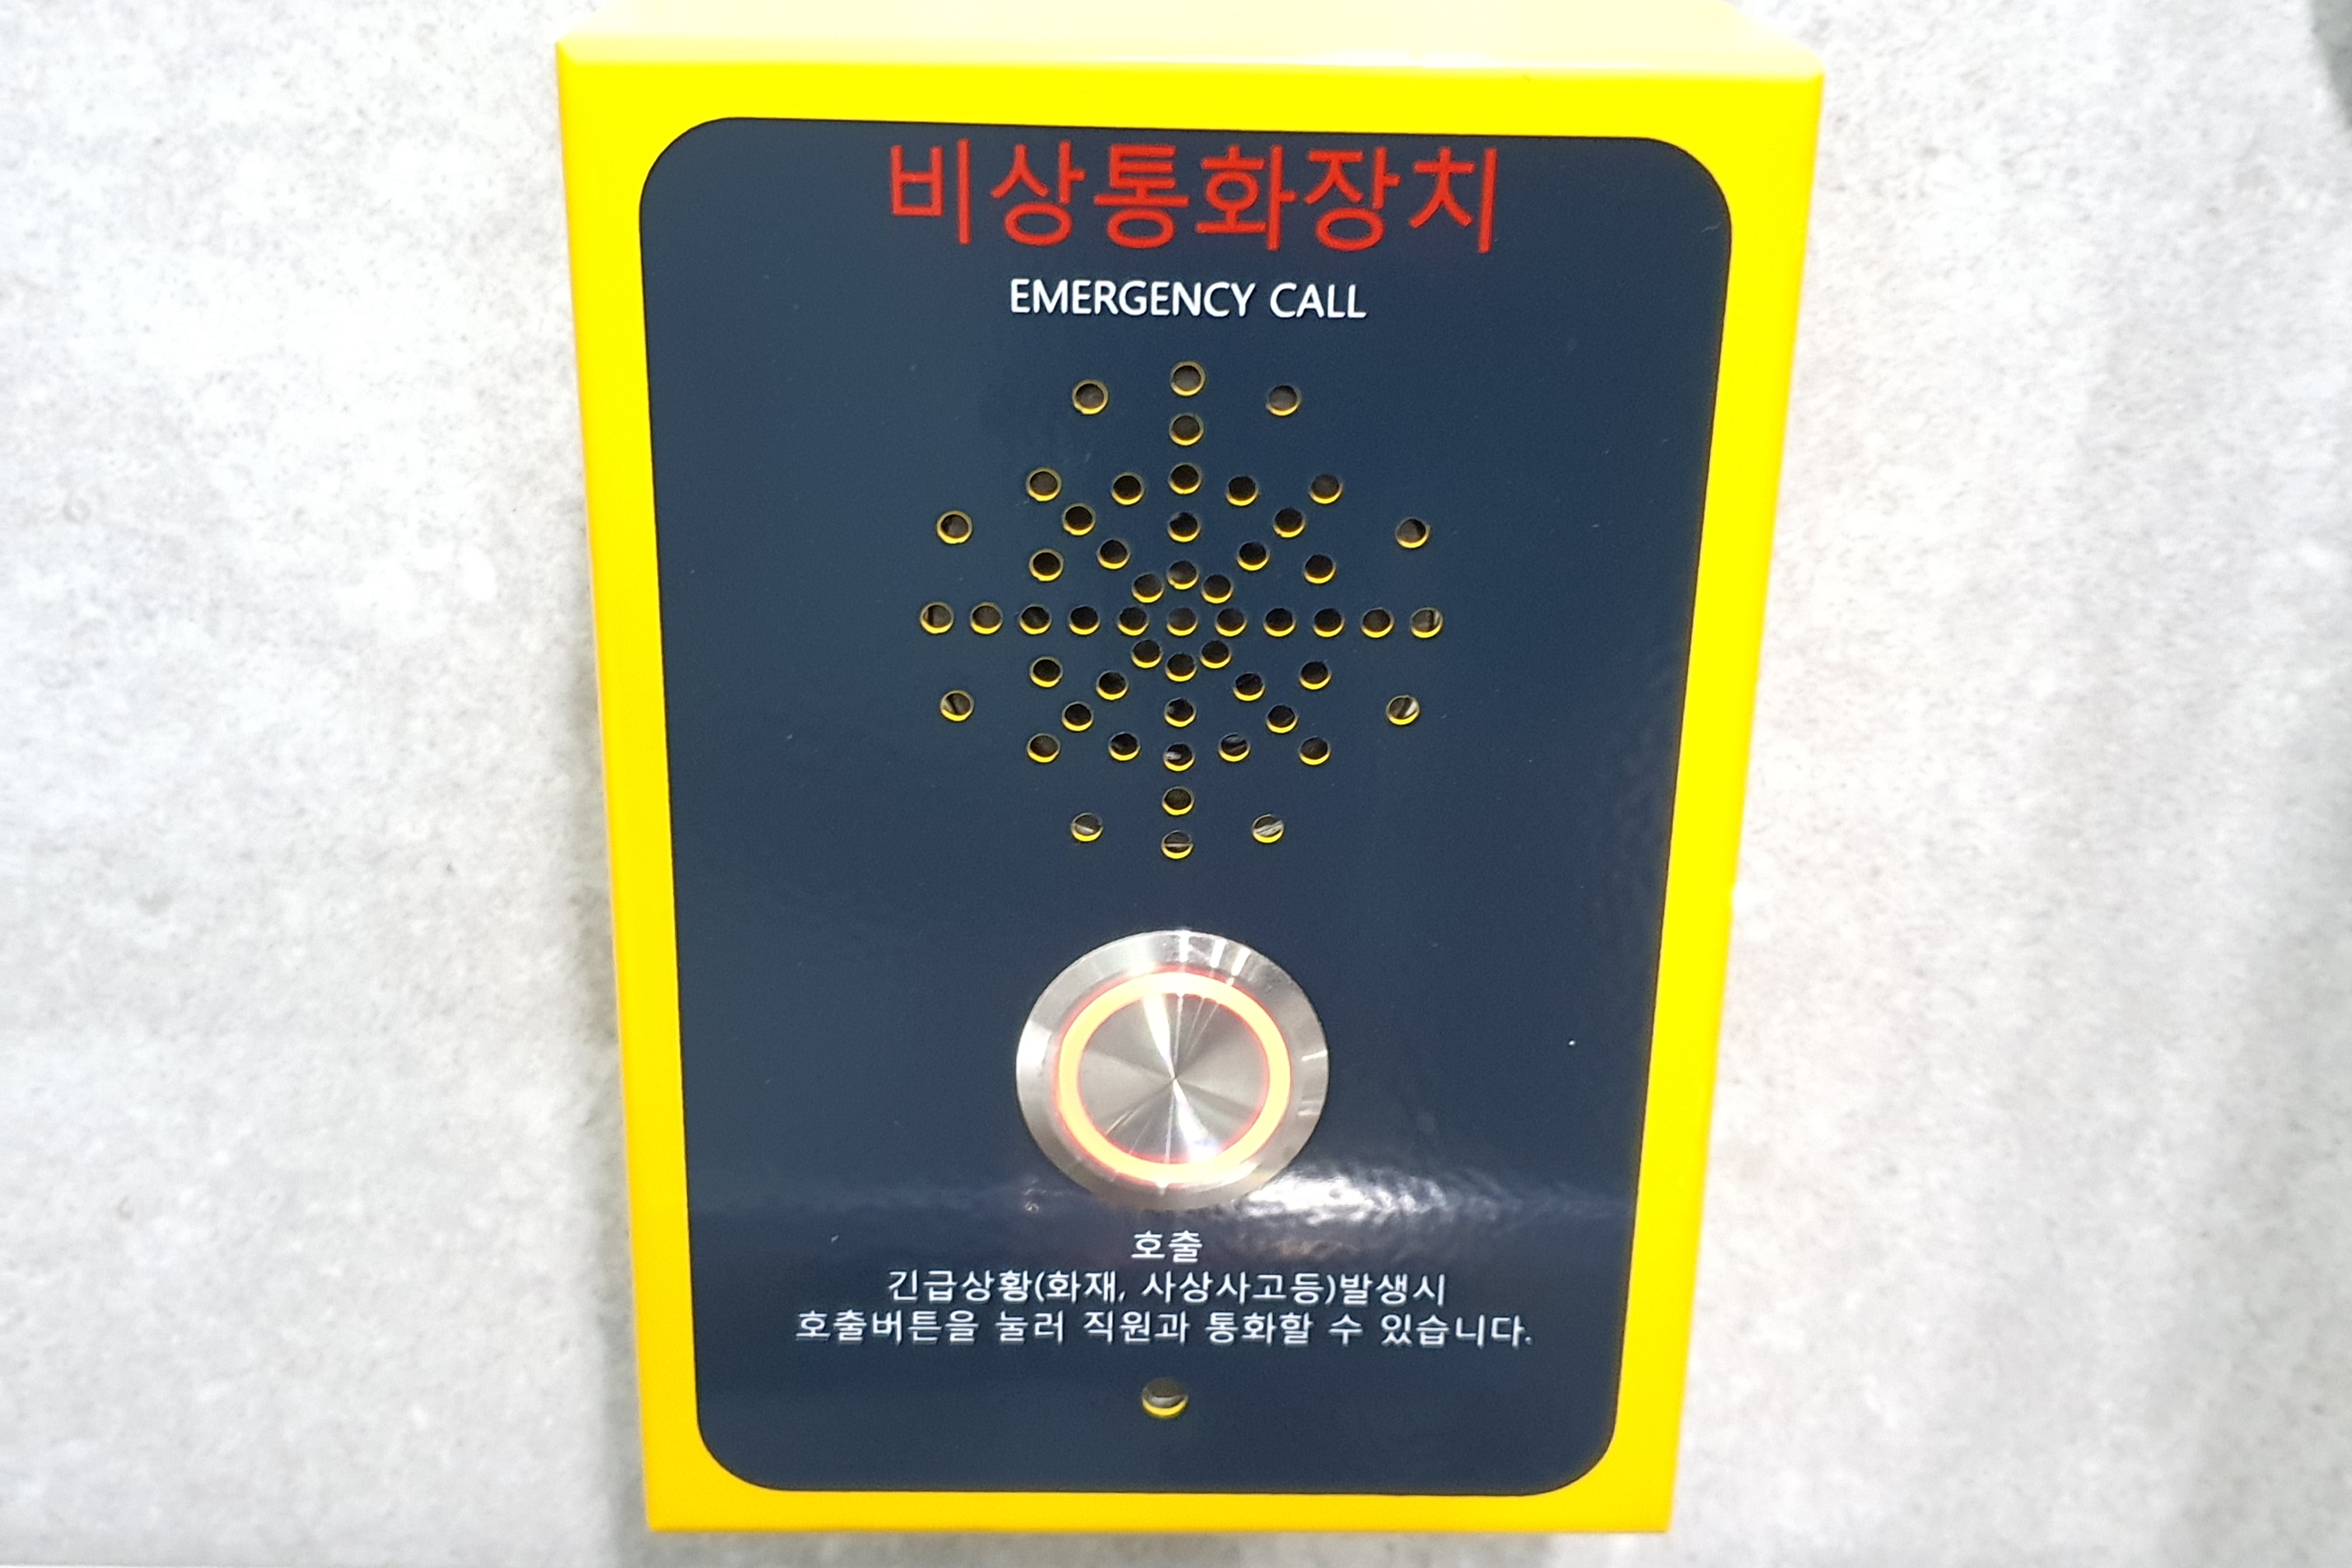 Parking lots0 : Emergency call equipment in Seoul Seongbuk Media Culture Maru
